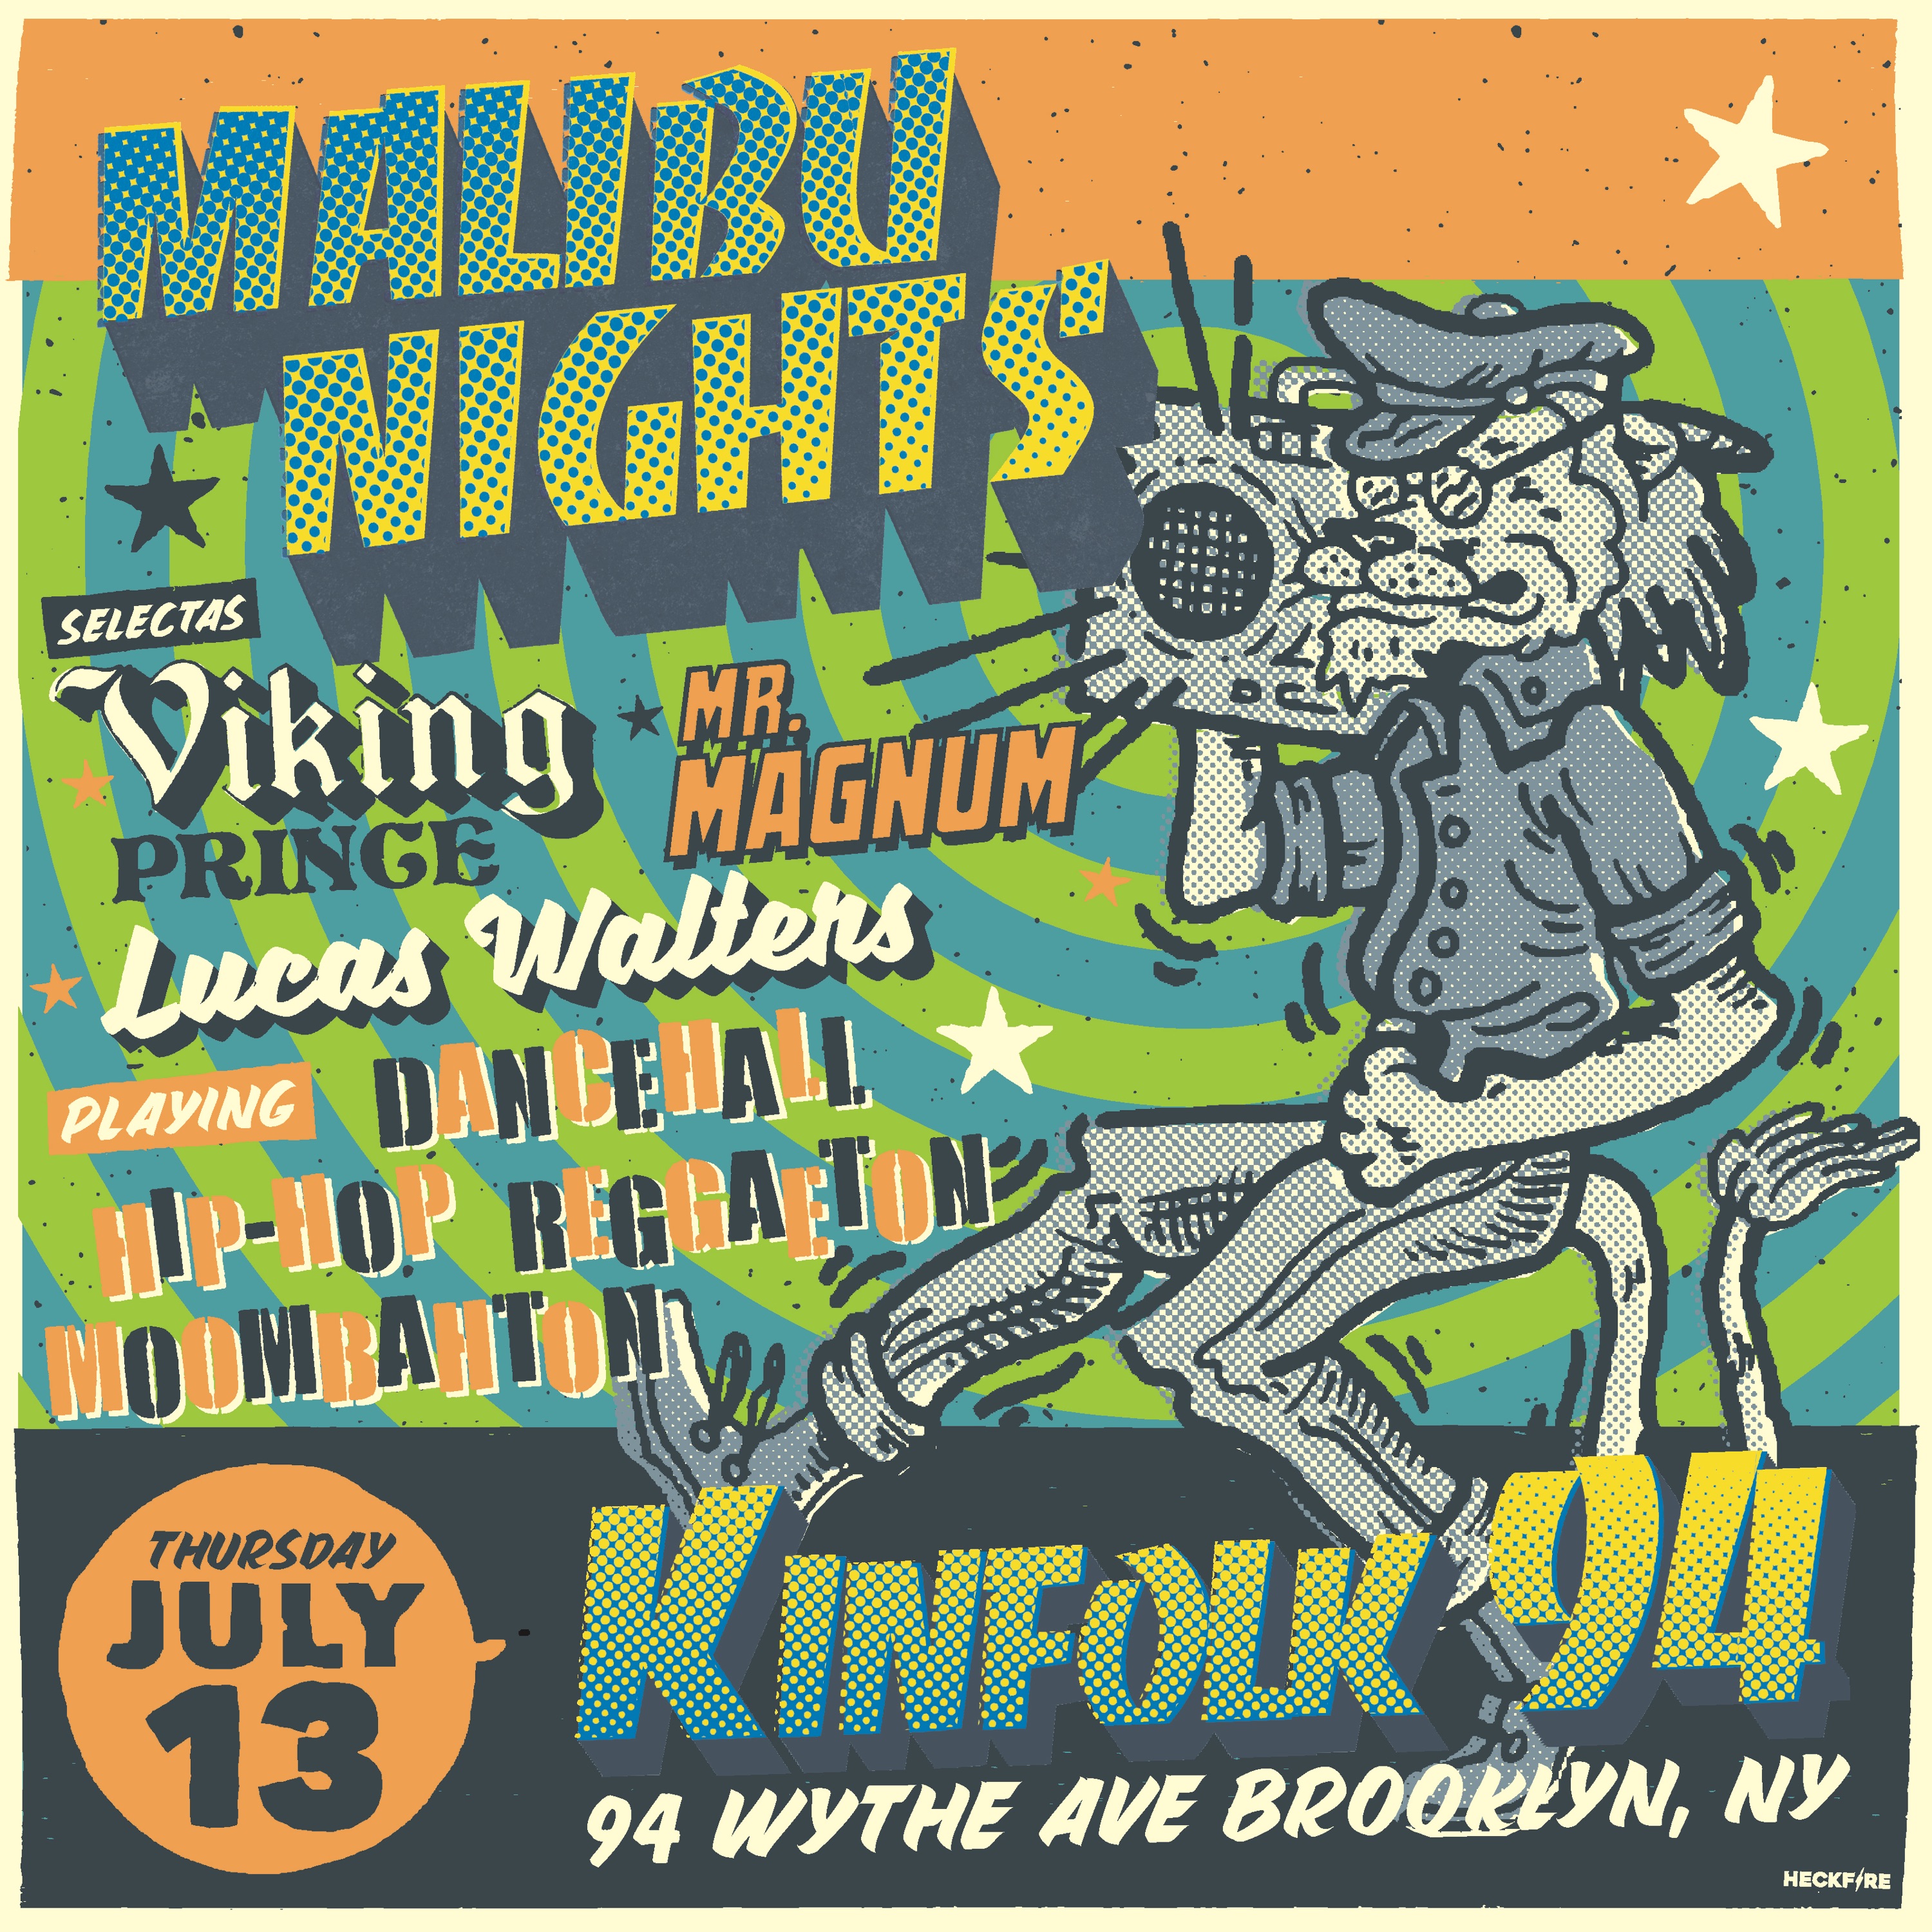 Malibu Nights NYC featuring Mr. Magnum